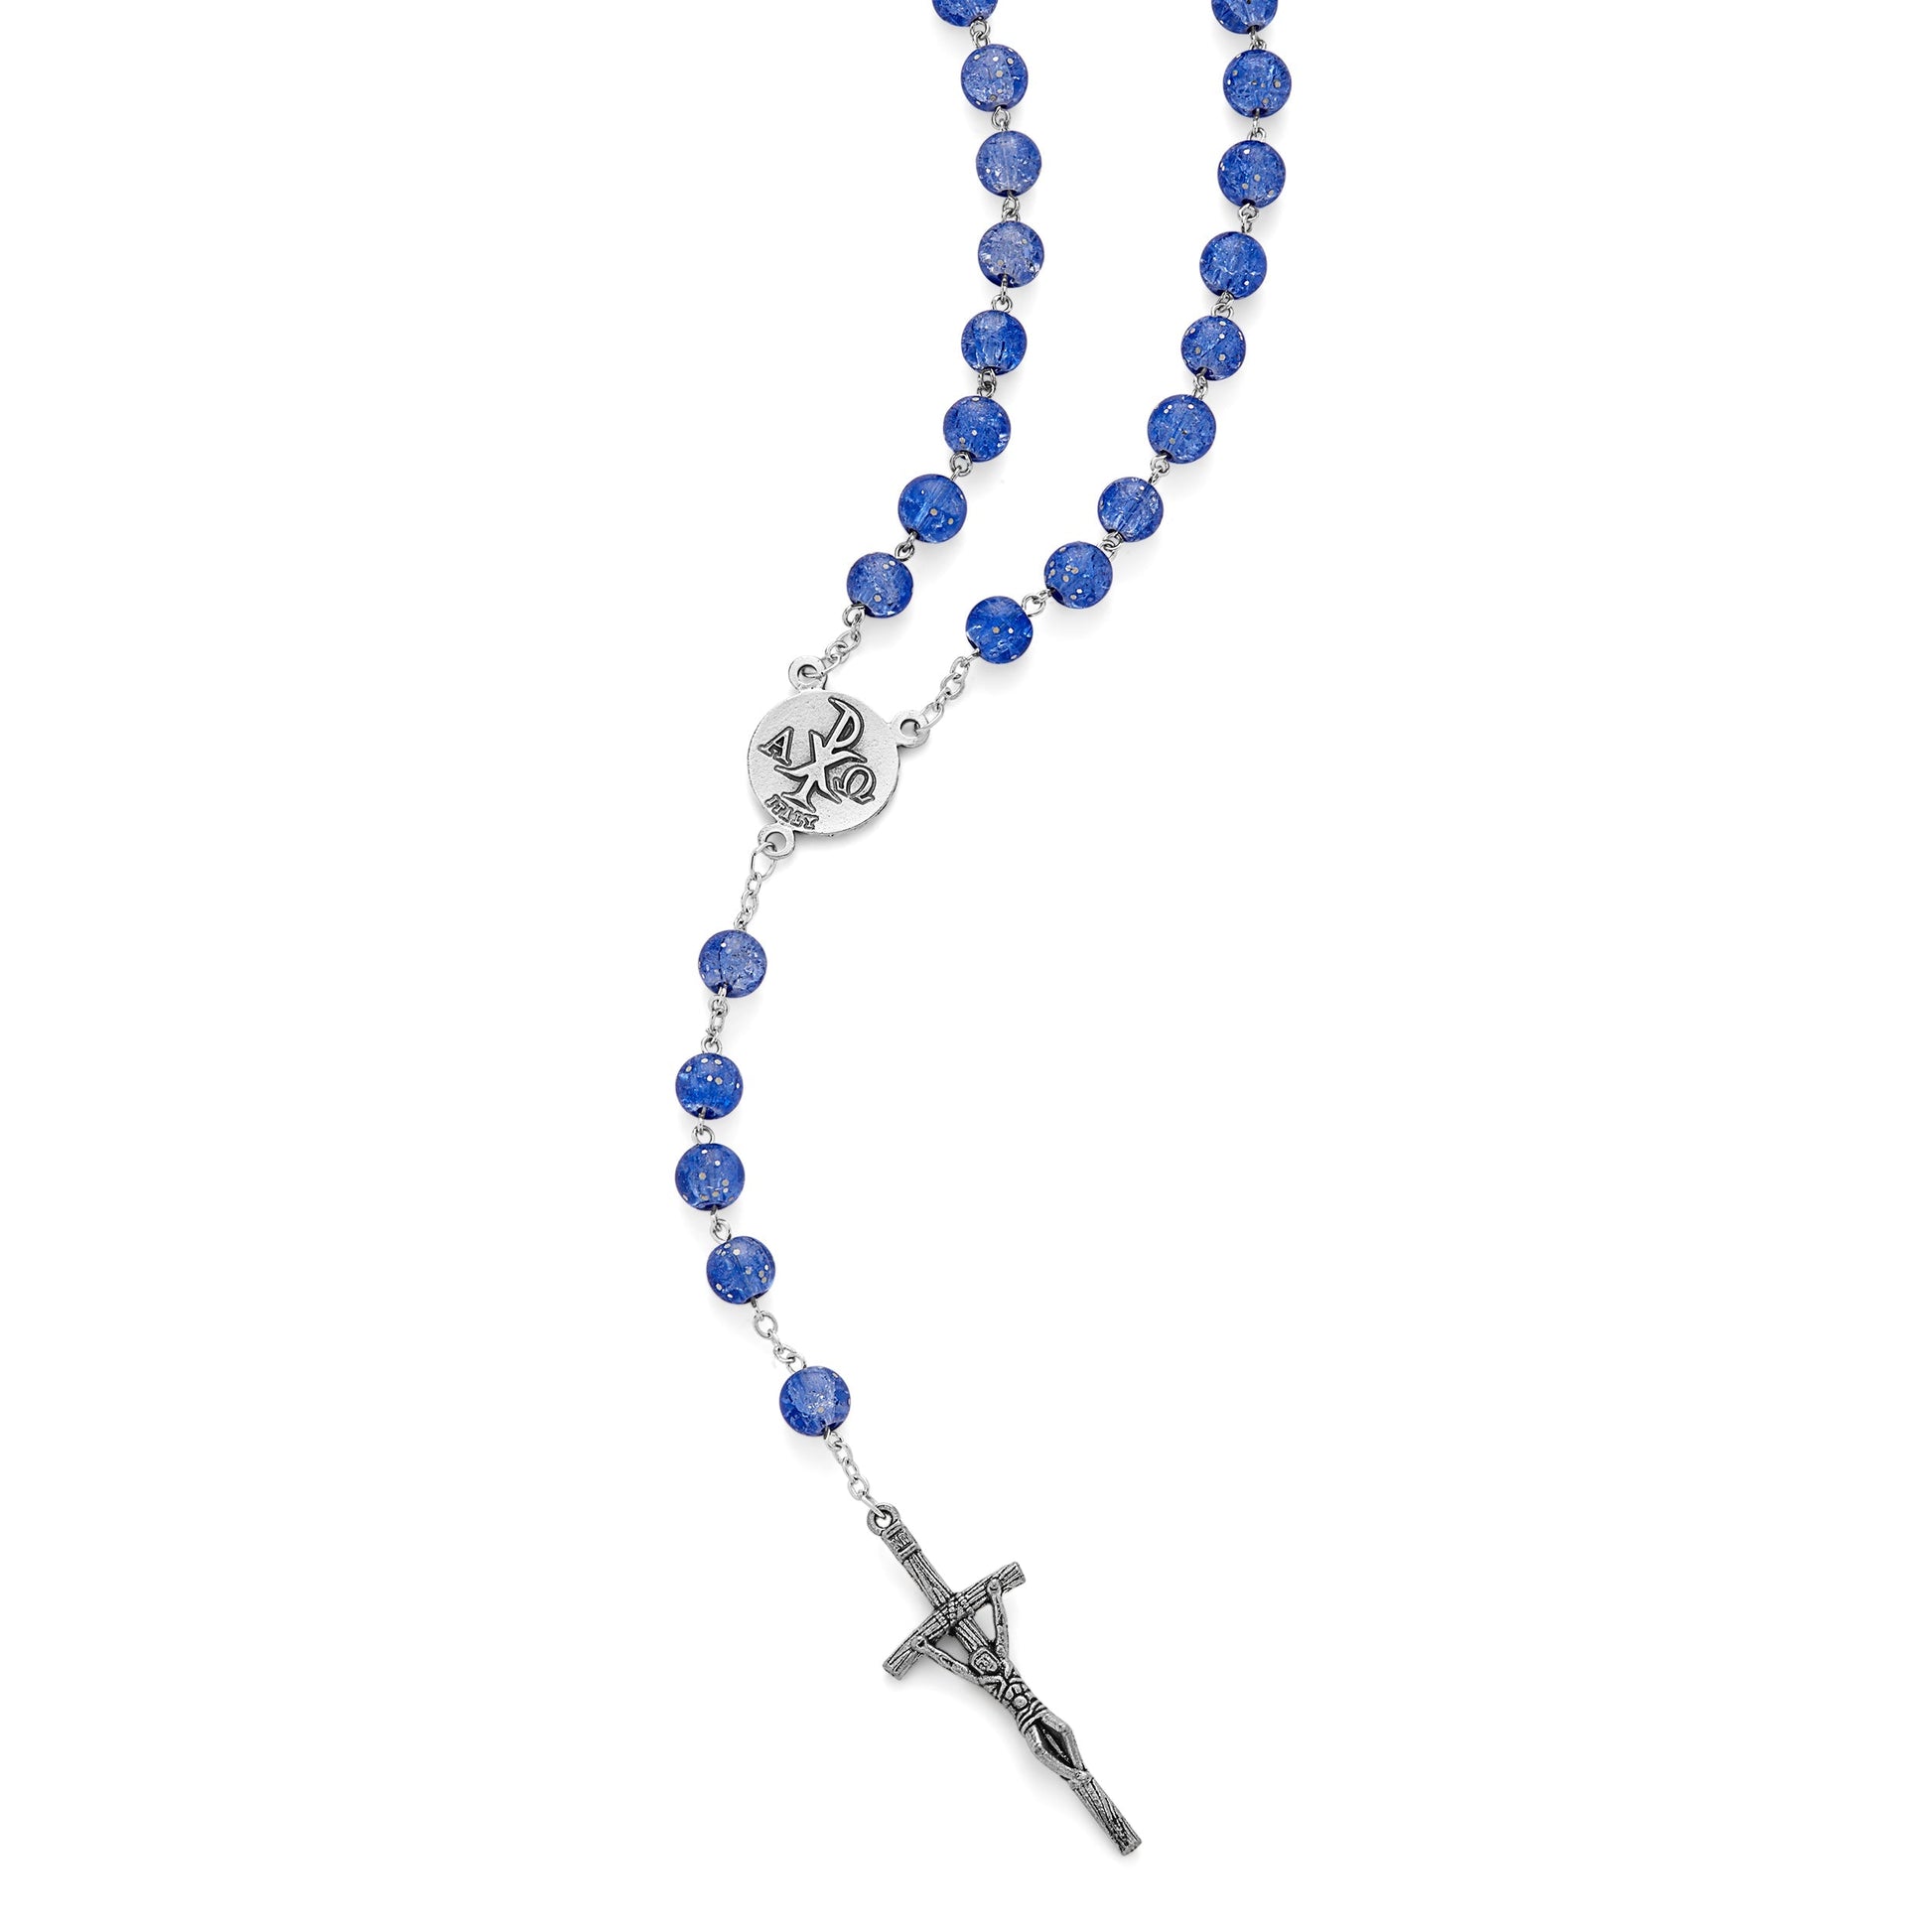 MONDO CATTOLICO Prayer Beads 53.5 cm (21.06 in) / 8 mm (0.31 in) Blue Glitter Rosary Beads